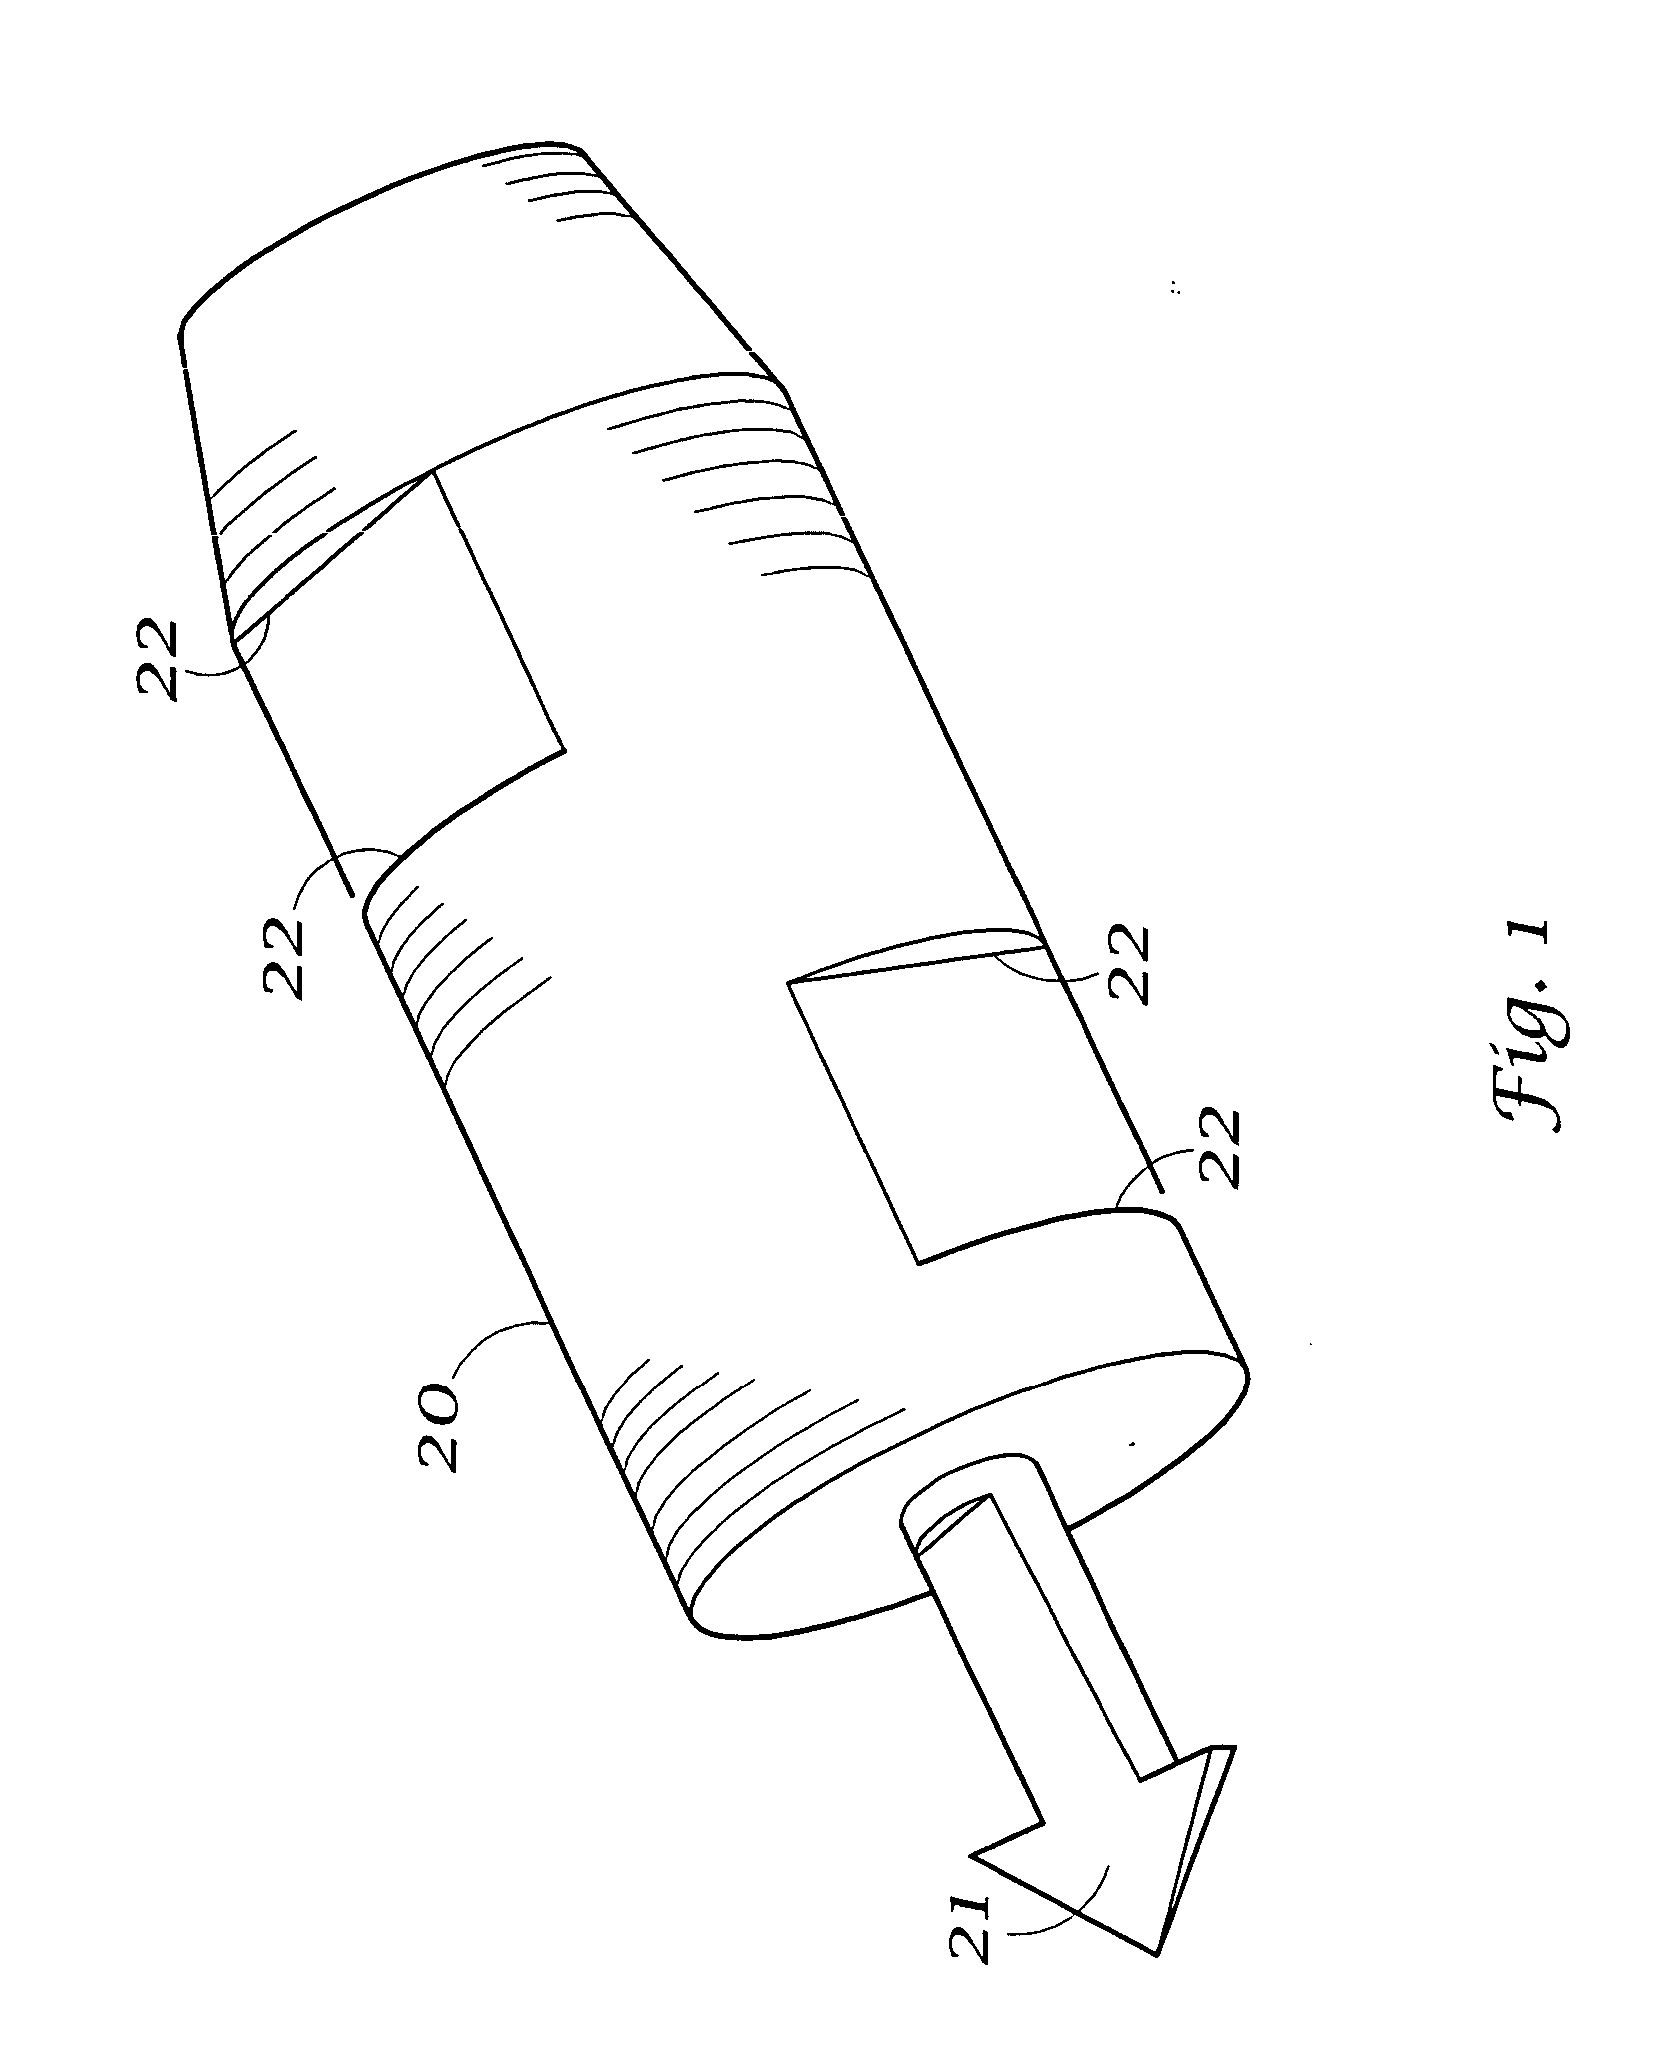 Fluid material dispensing syringe